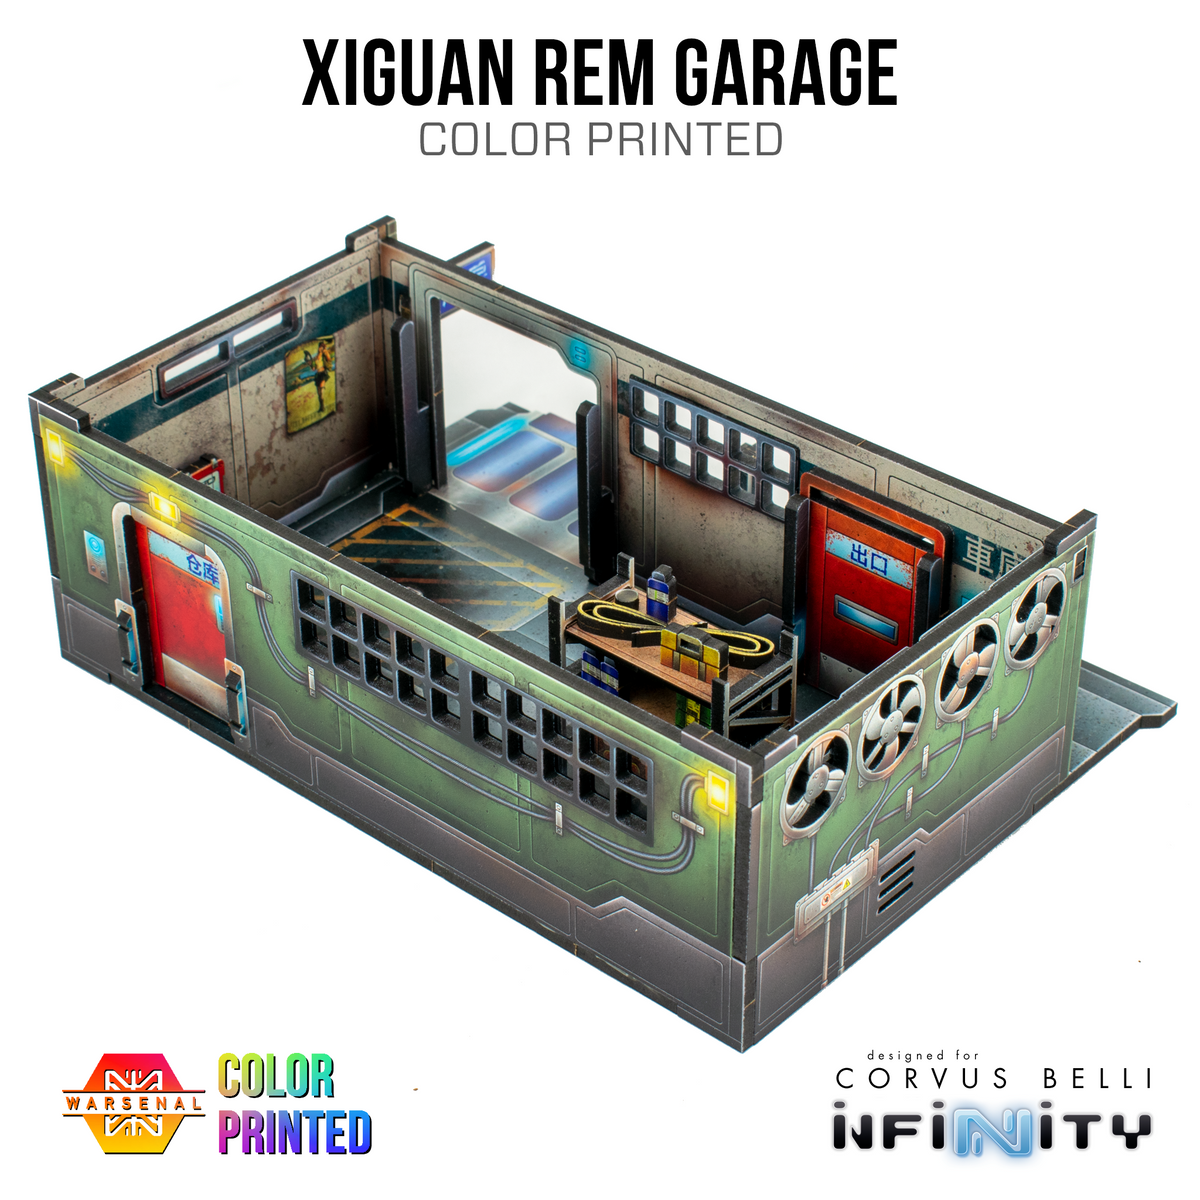 Pilas Xiguan - Rem Garage